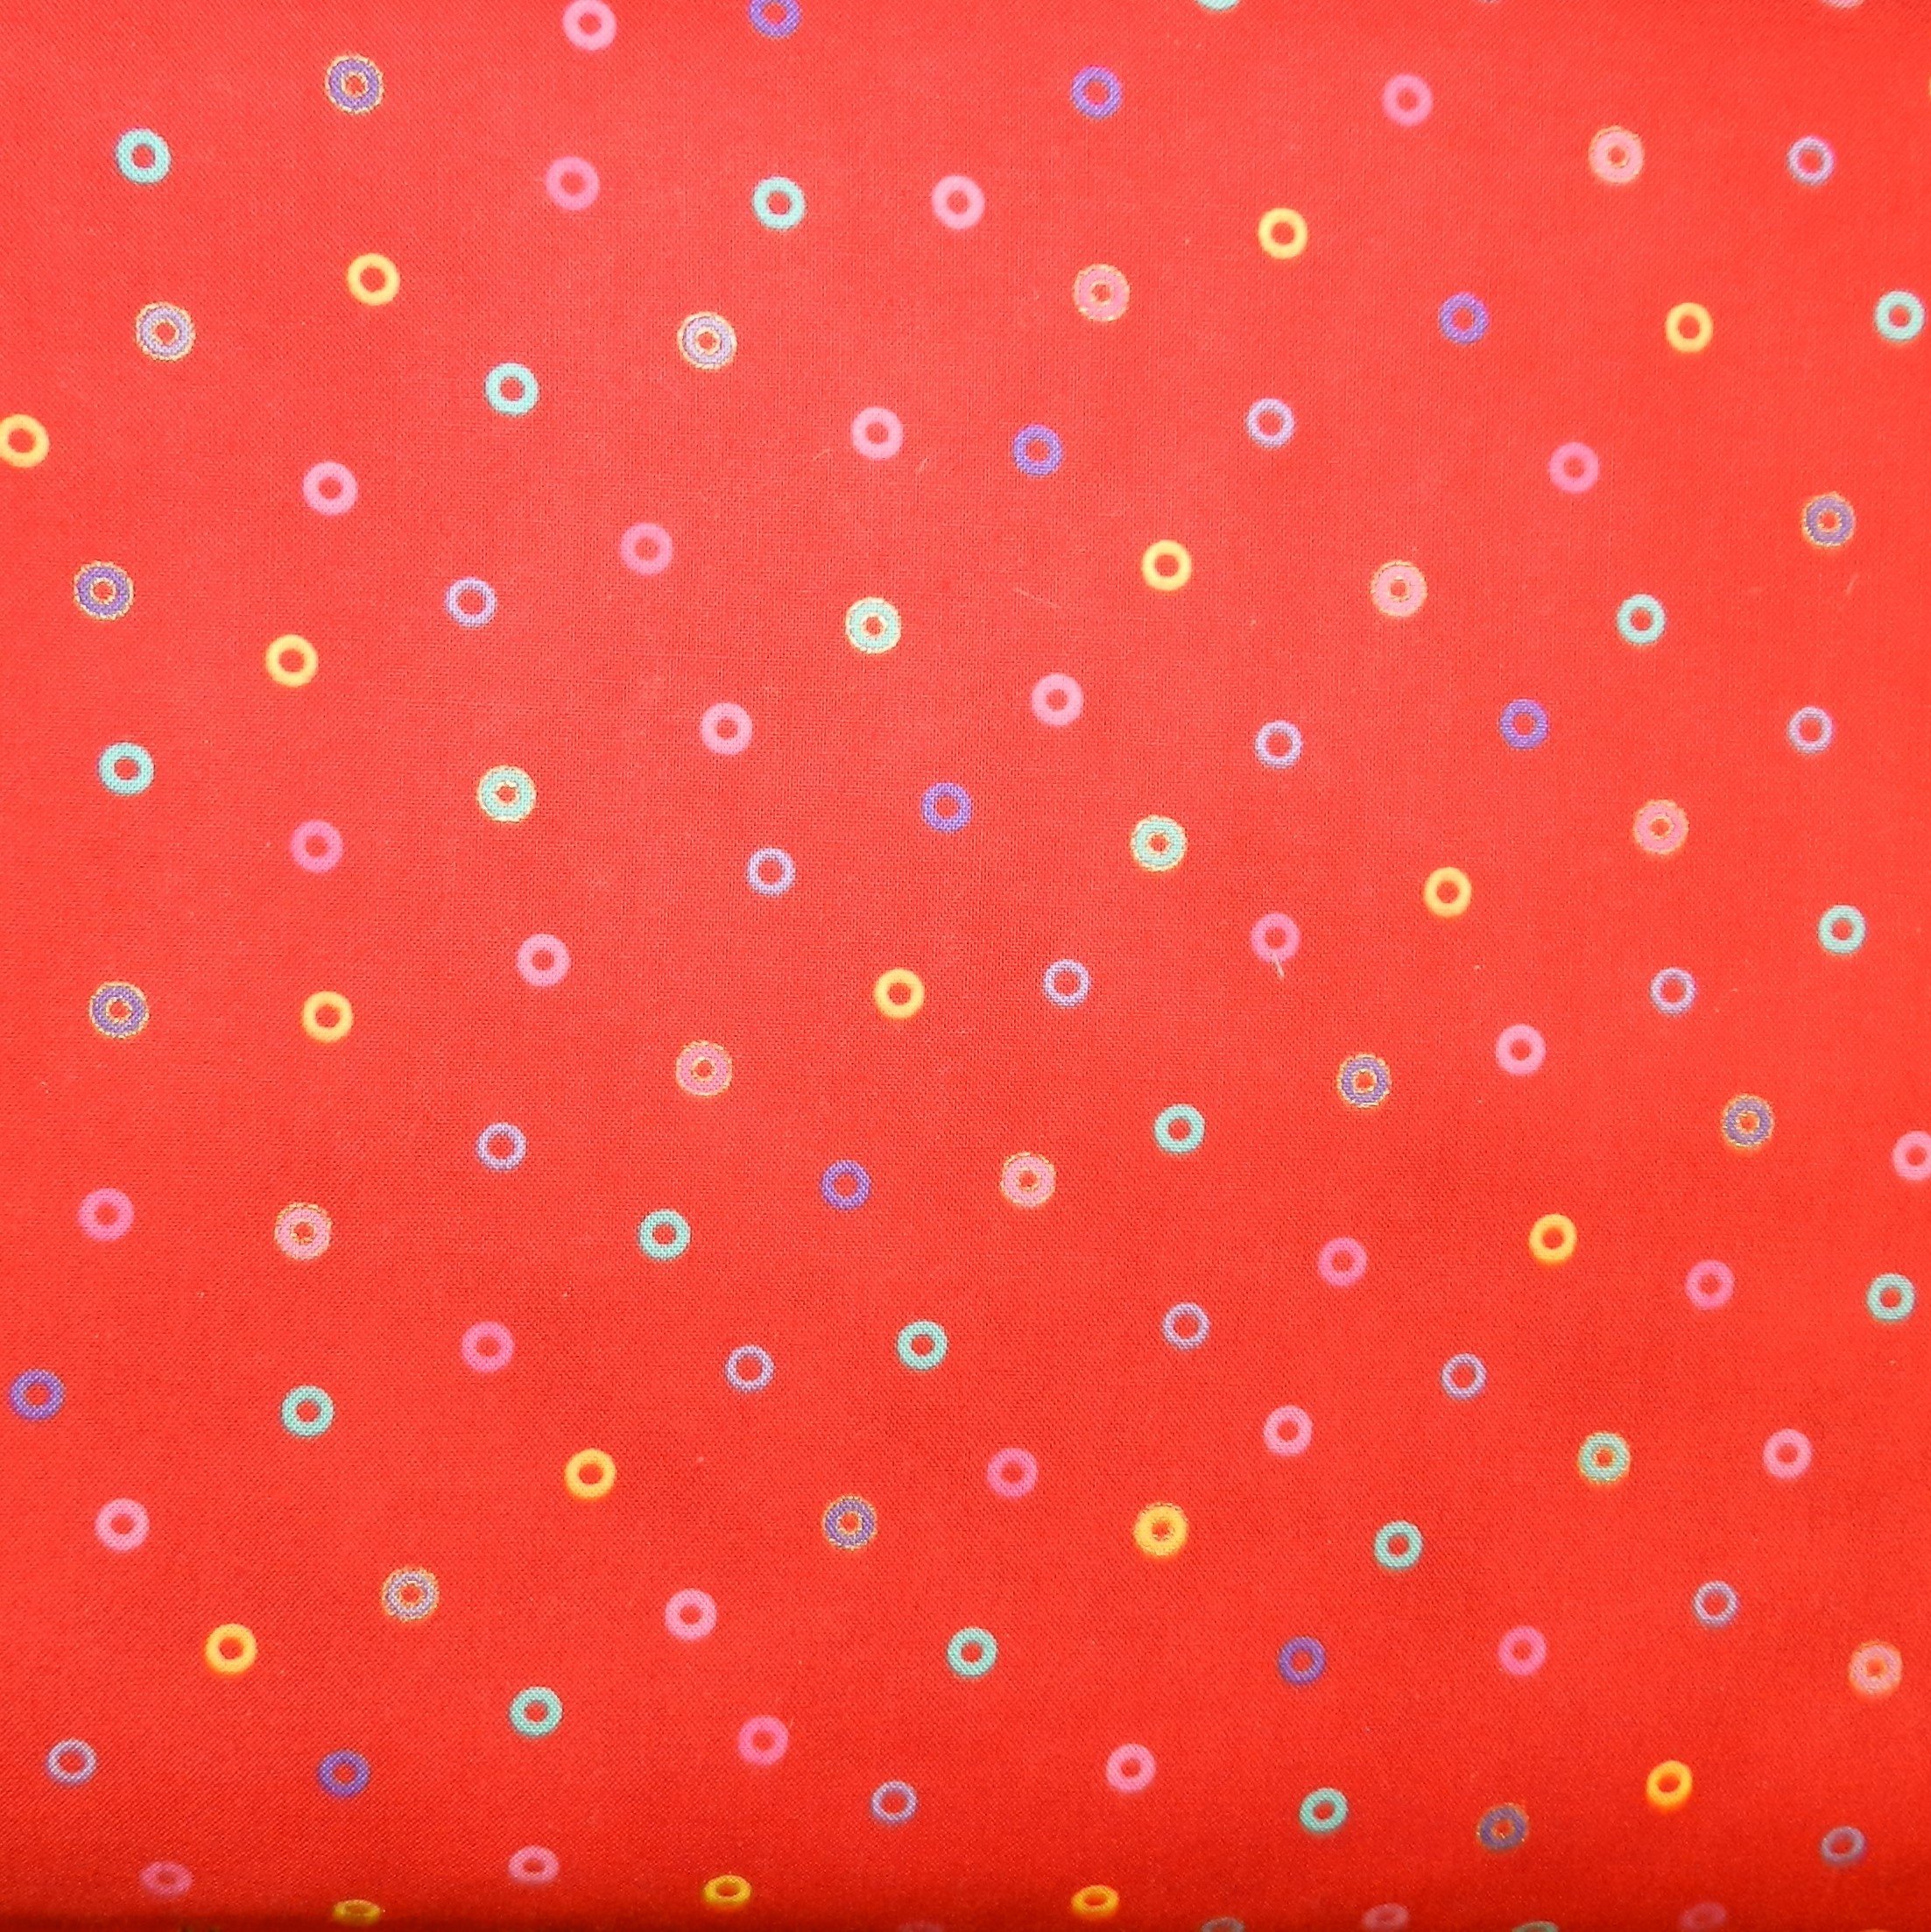 Feline Frolic Laurel Burch Cats Red Panel 100% Cotton Print Fabric 